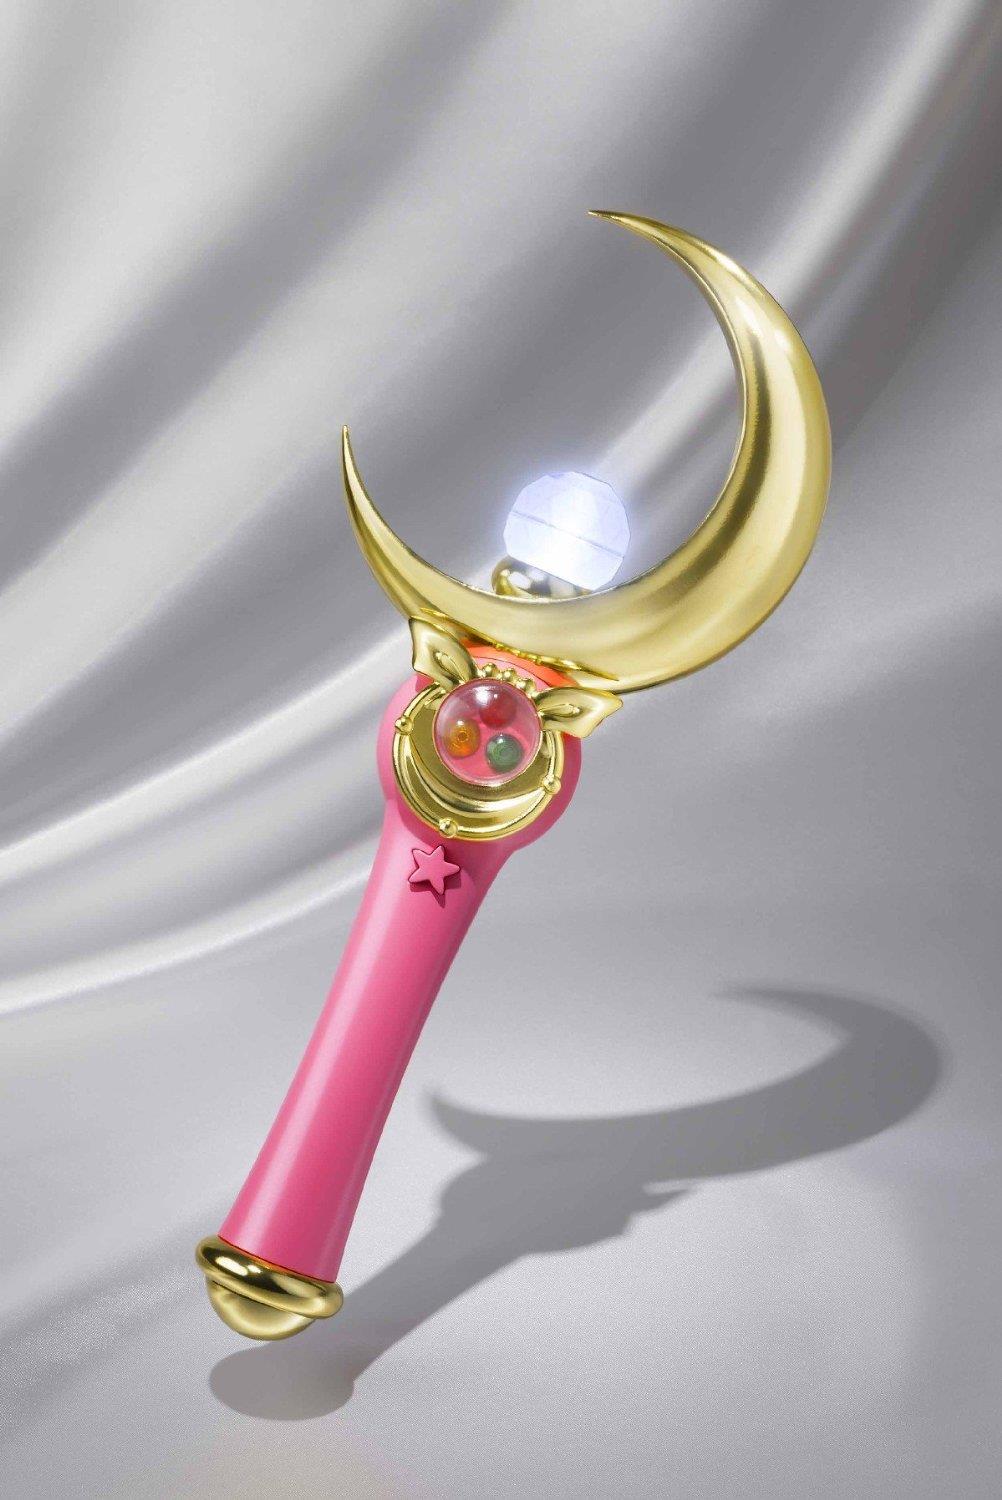 Sailor Moon: Moon Stick Proplica 1/1 Scale